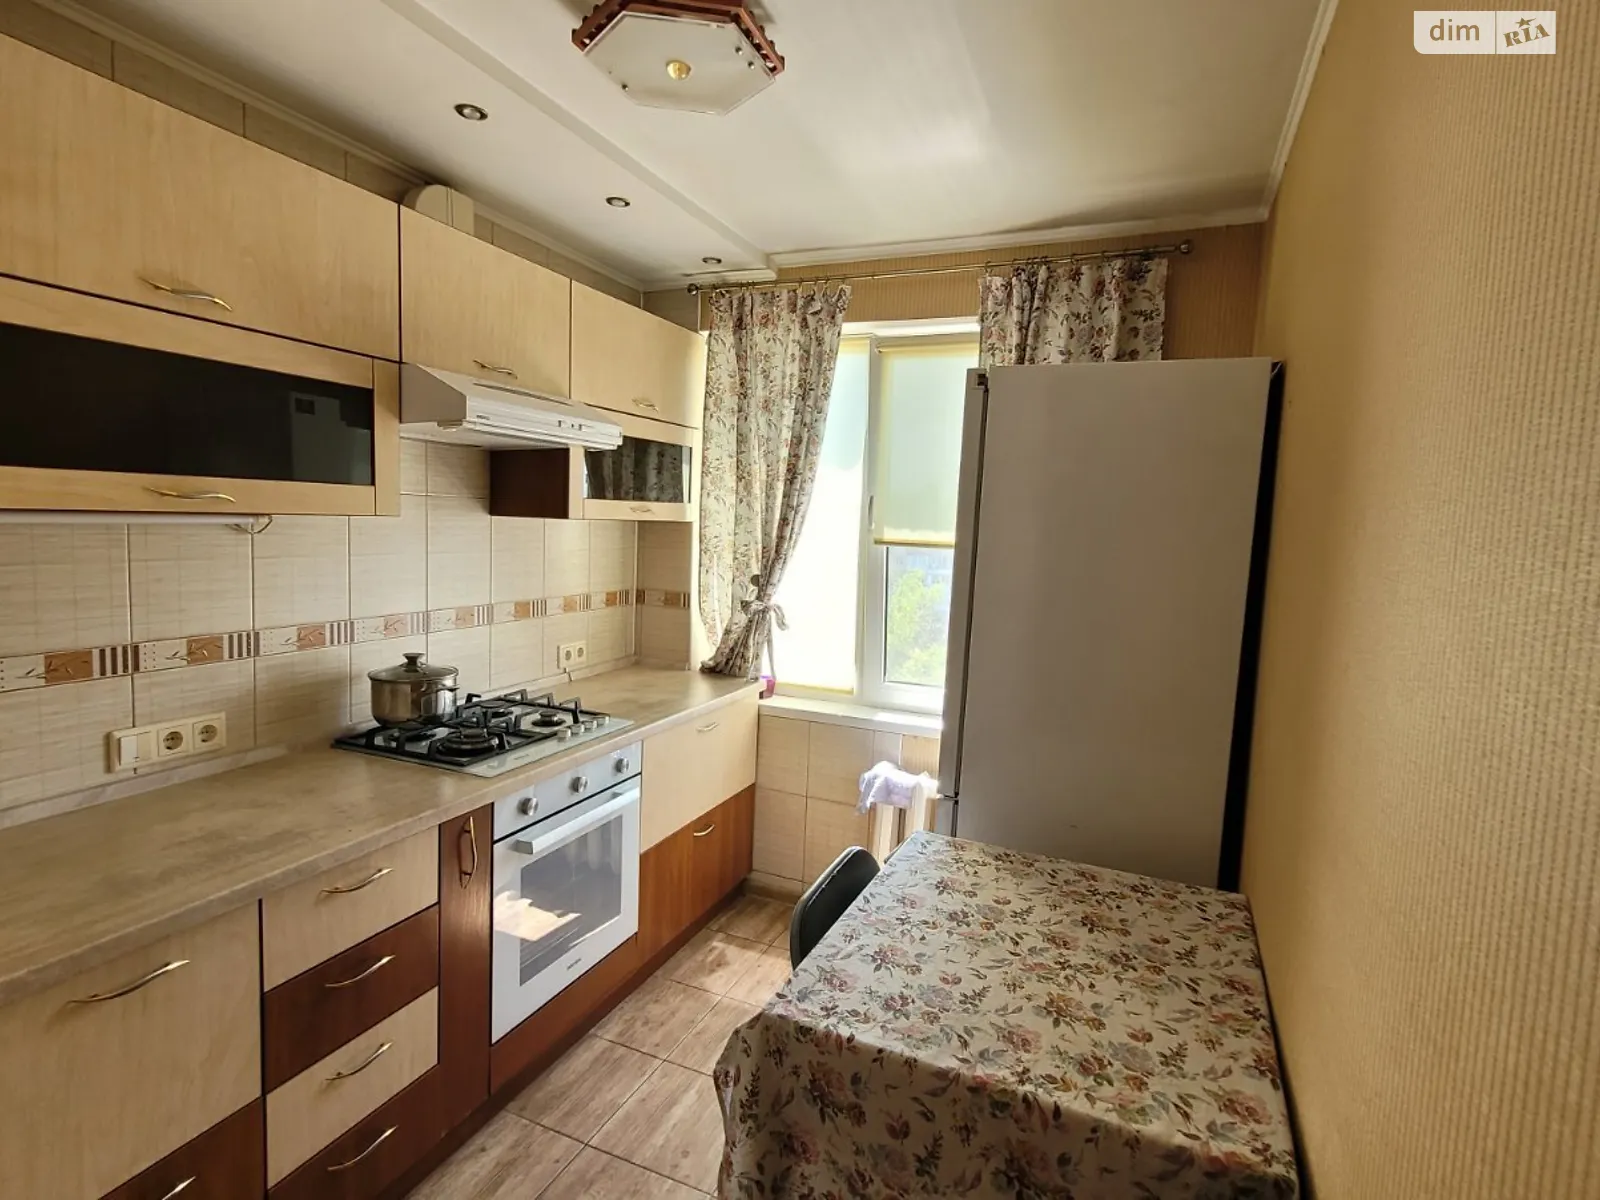 Продается 3-комнатная квартира 55.7 кв. м в Одессе, просп. Академика Глушко, 26 - фото 1